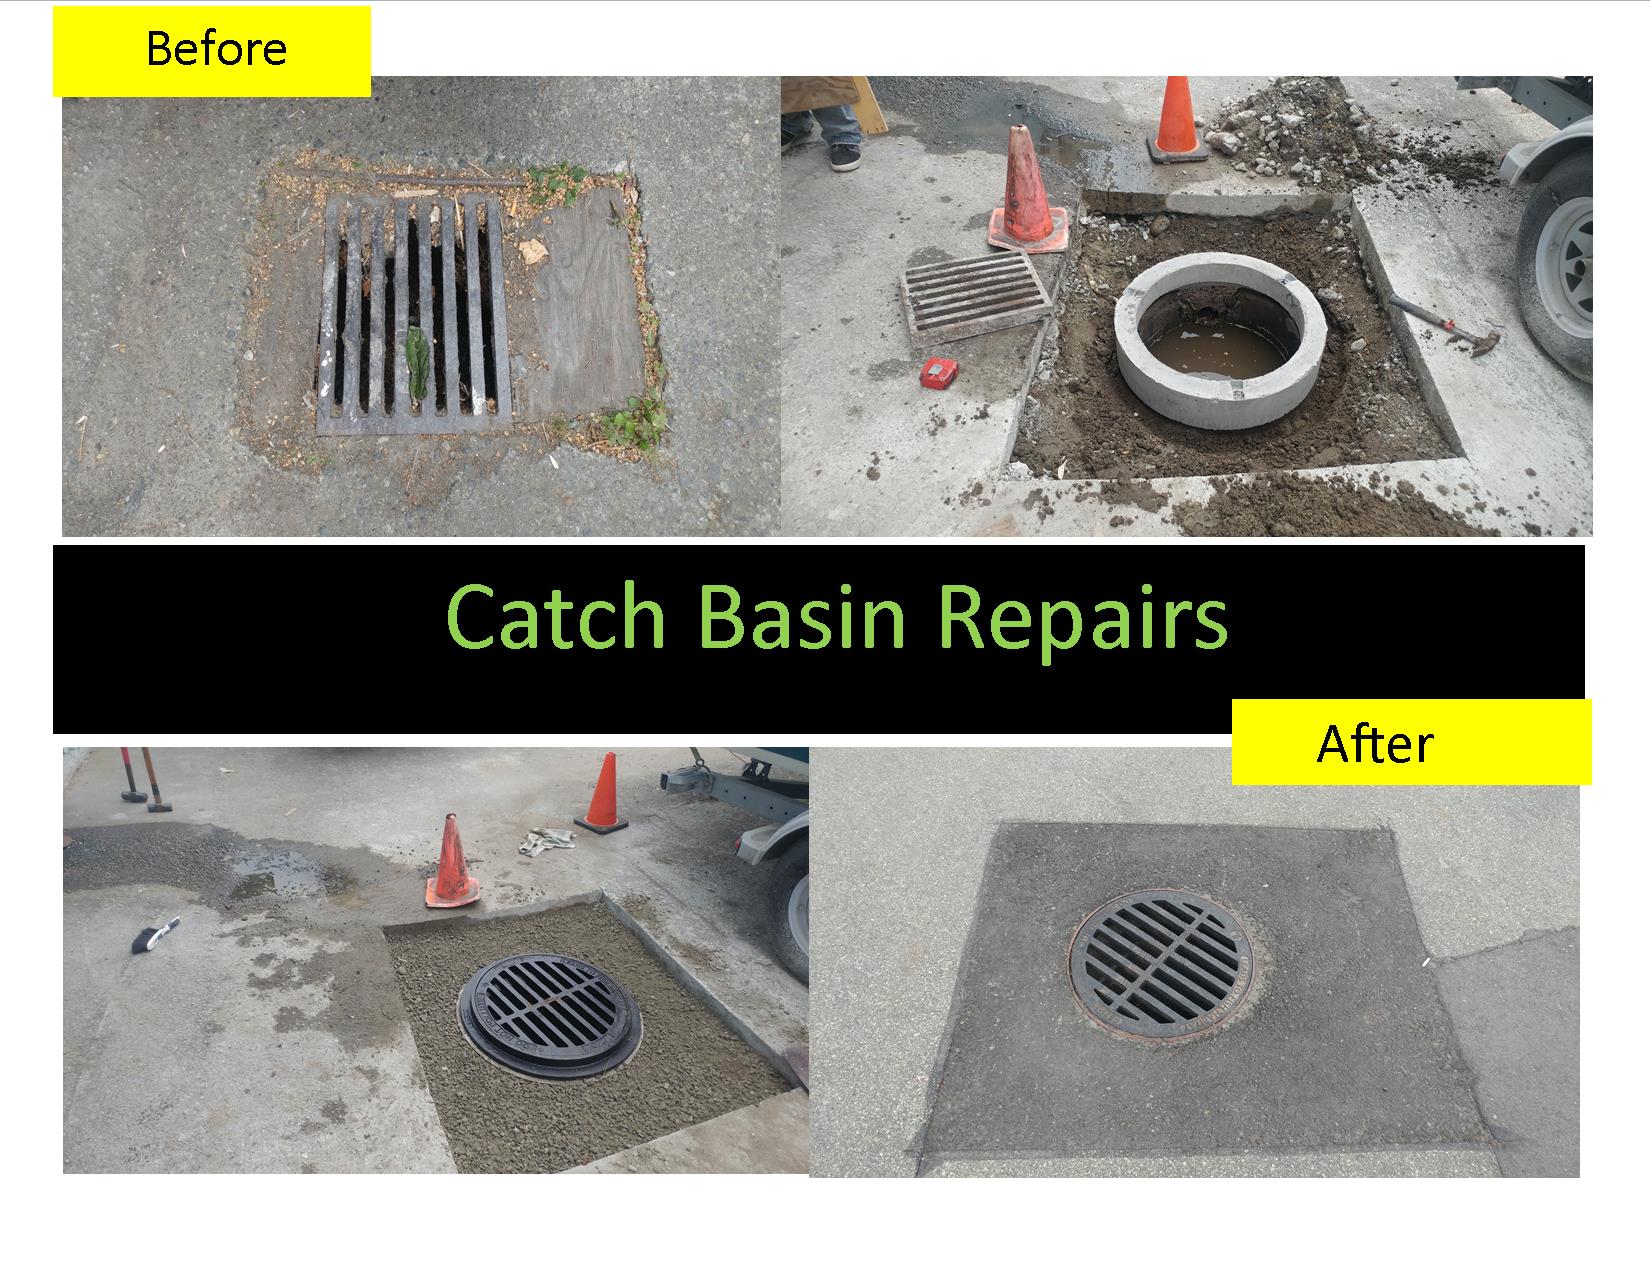 Catch Basin repair